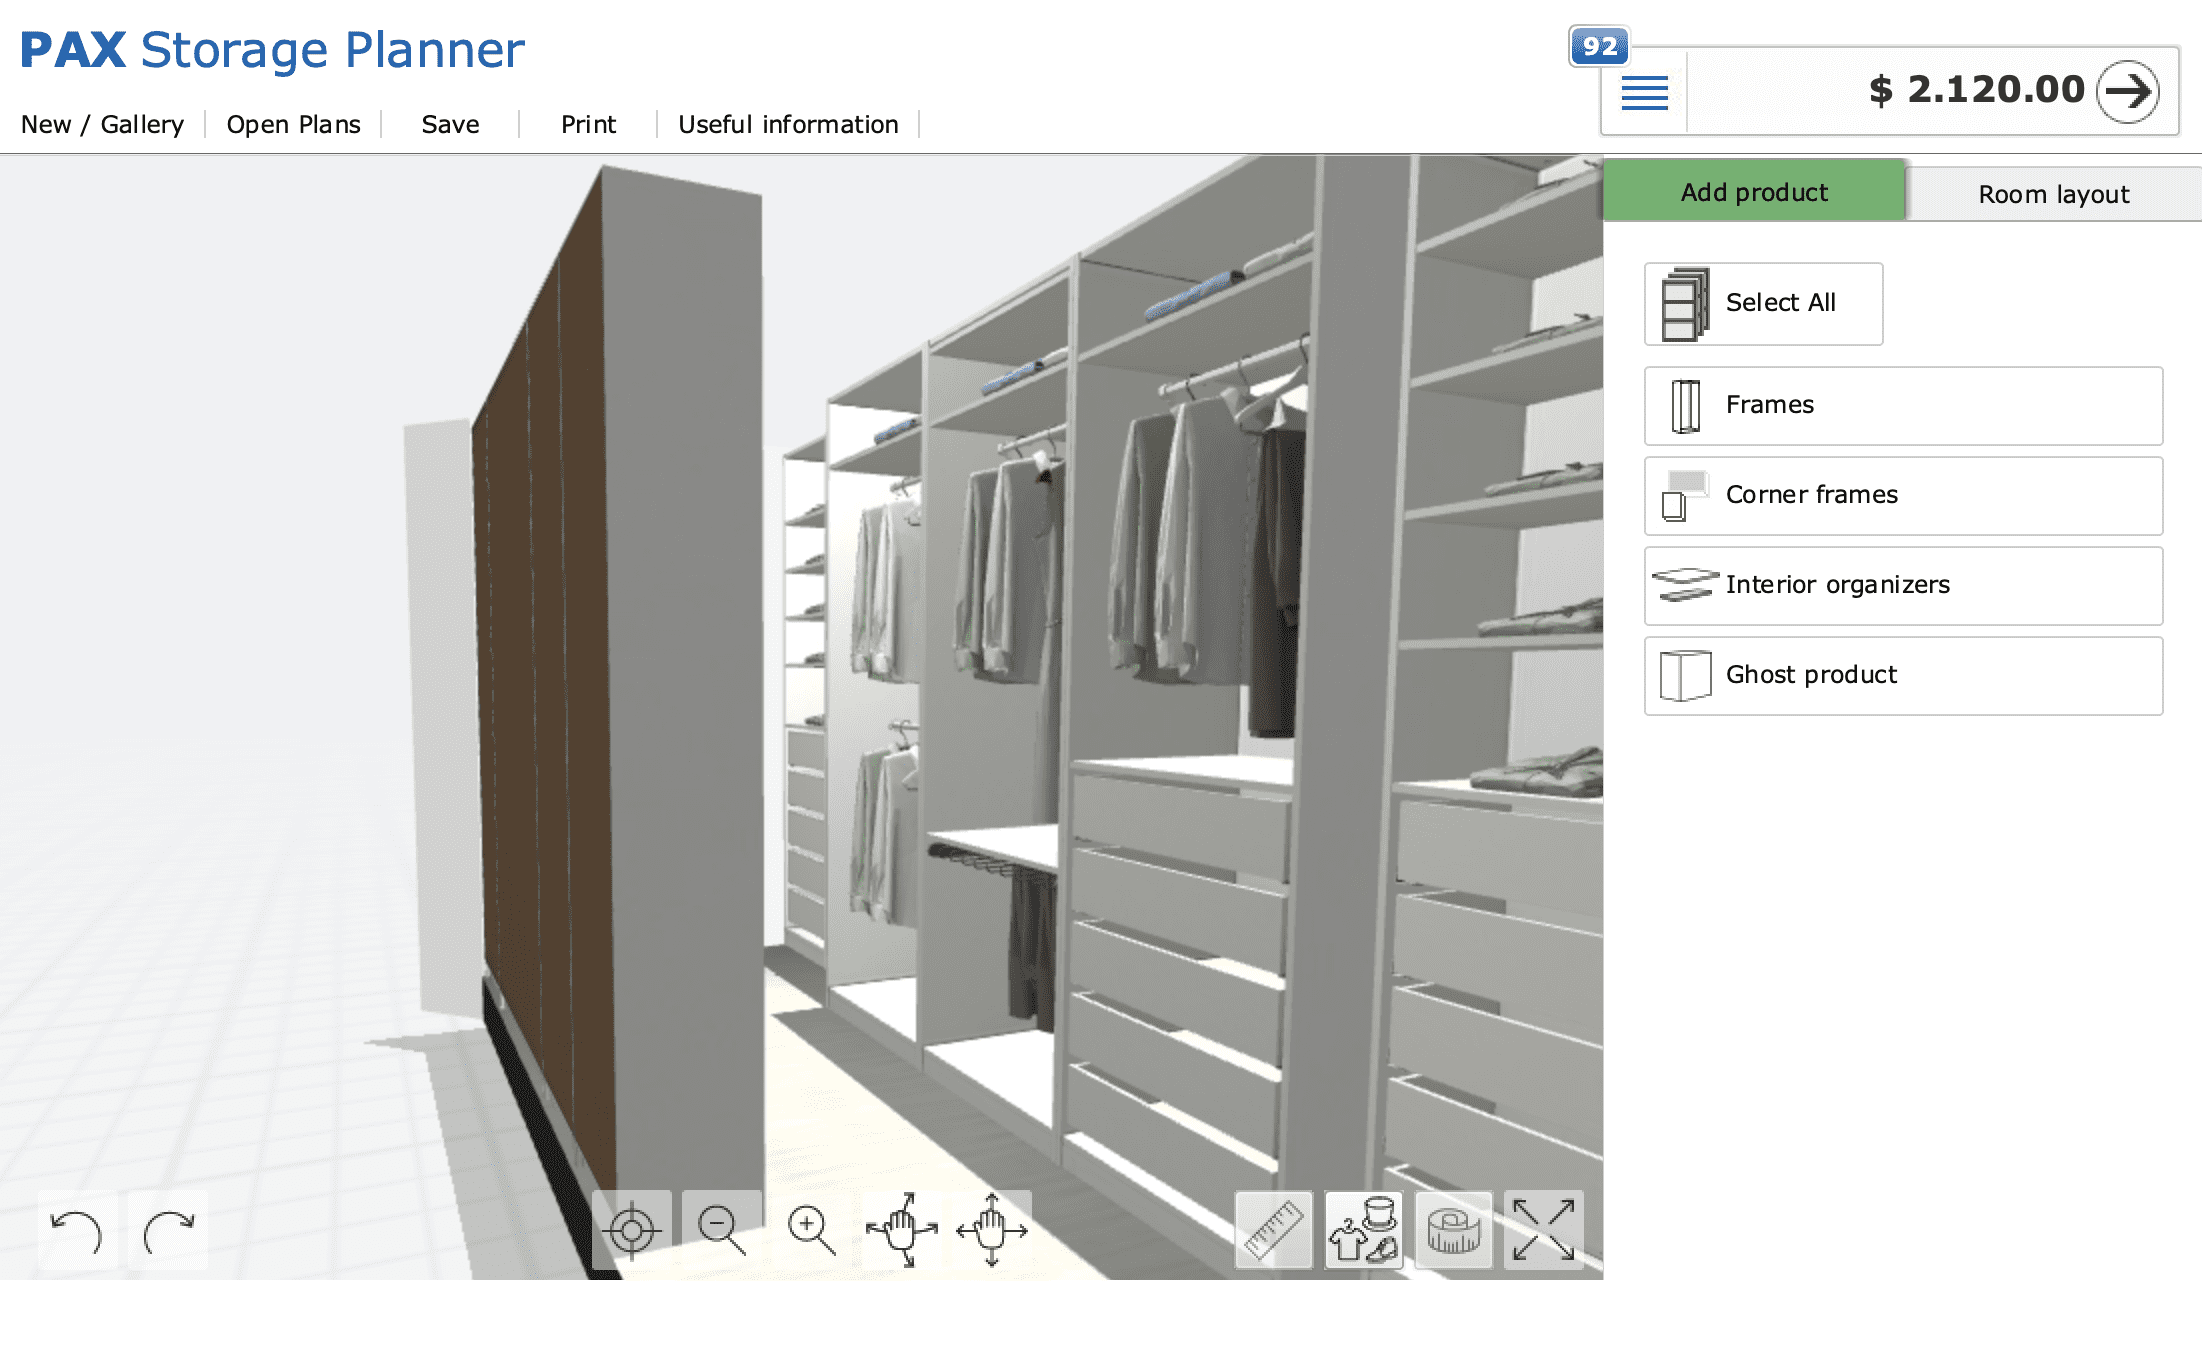 How to Design an IKEA Pax Closet System